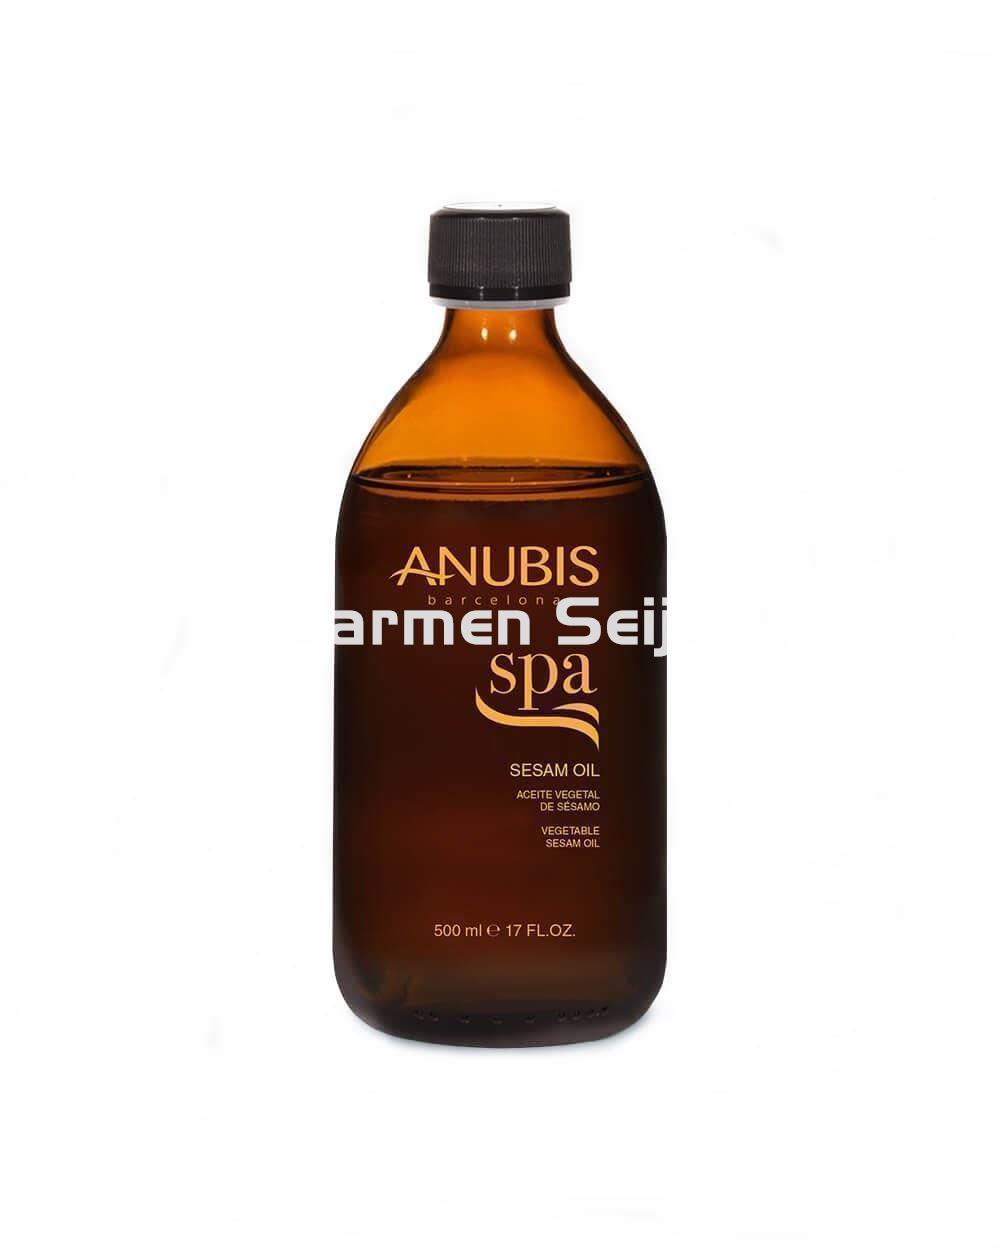 Anubis Aceite Vegetal Hidratante y Nutritivo Sesam Oil Línea Spa - Imagen 1